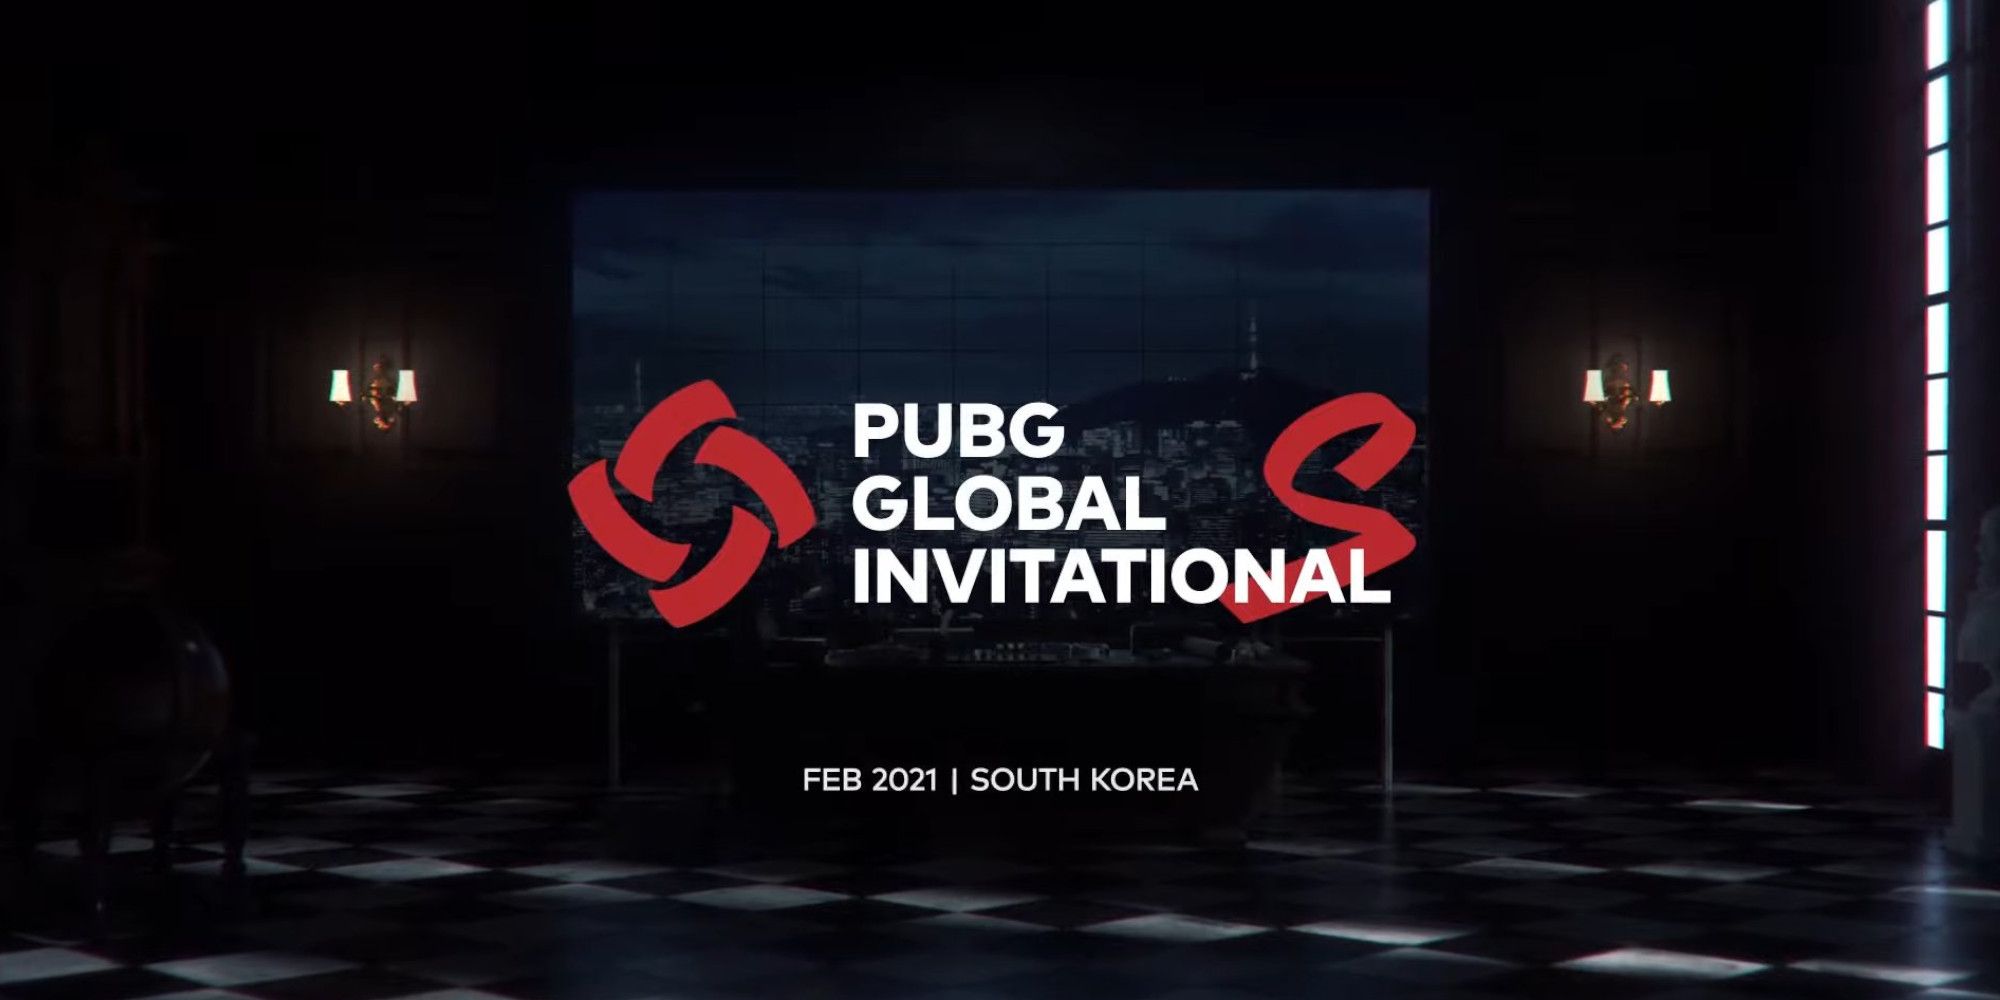 PUBG Global Invitational symbol in a darkened room